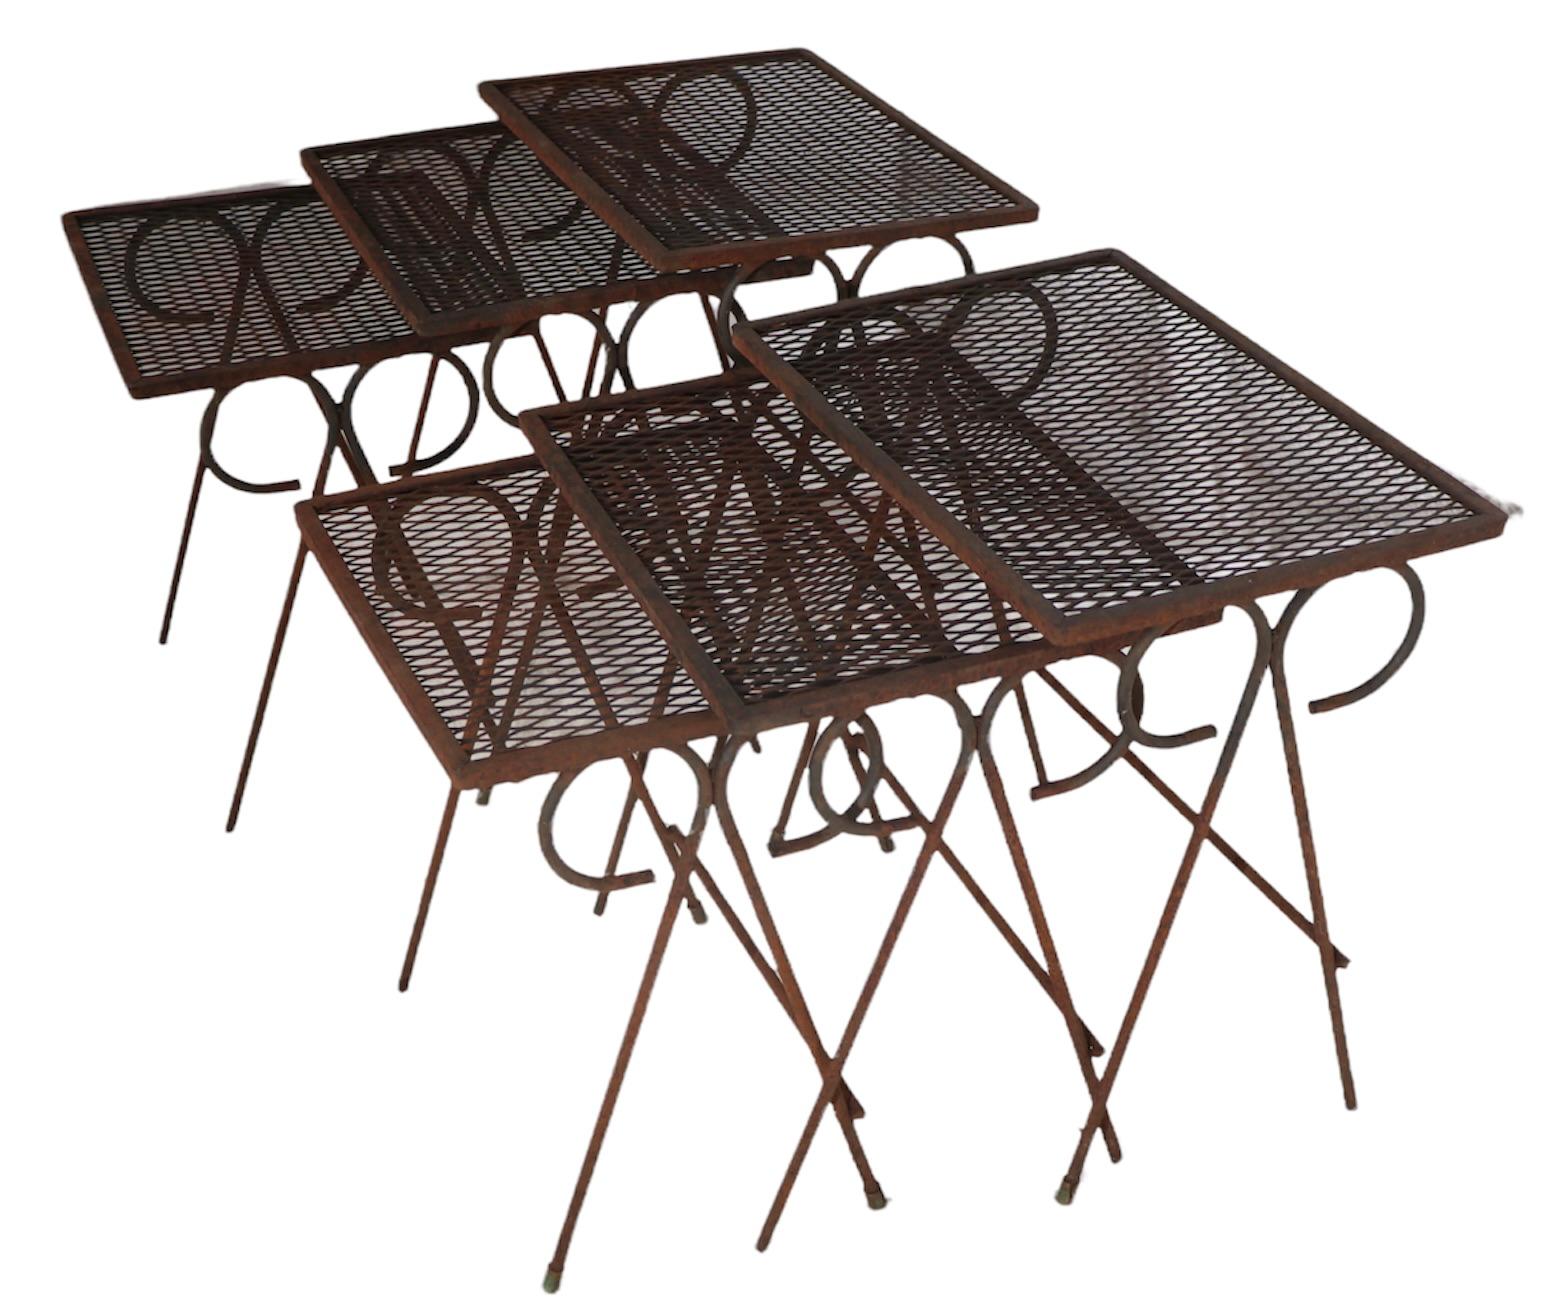 wrought iron table set -china -b2b -forum -blog -wikipedia -.cn -.gov -alibaba